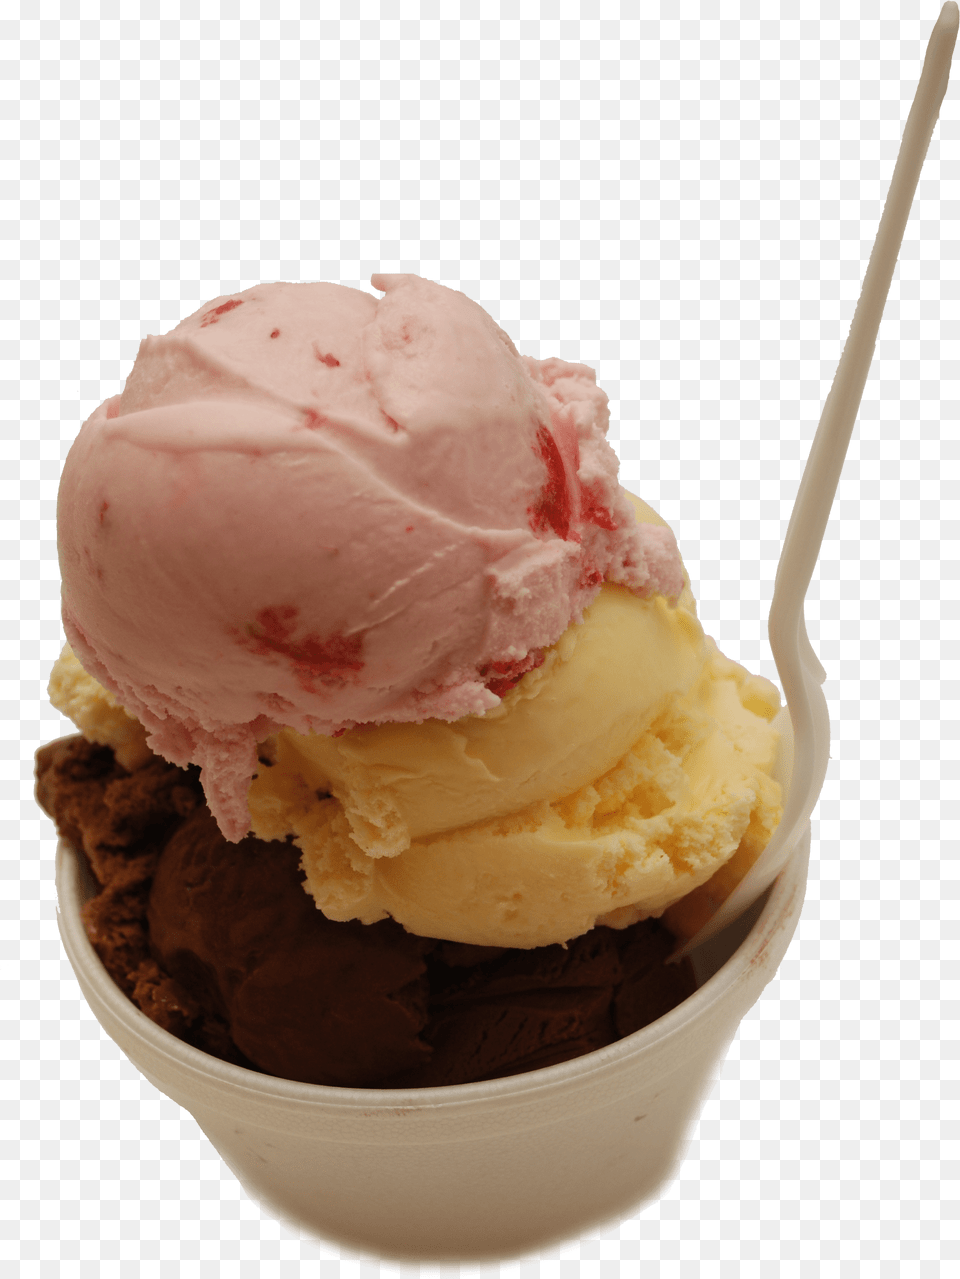 Transparent Ice Cream Scoops Soy Ice Cream, Dessert, Food, Ice Cream, Soft Serve Ice Cream Png Image